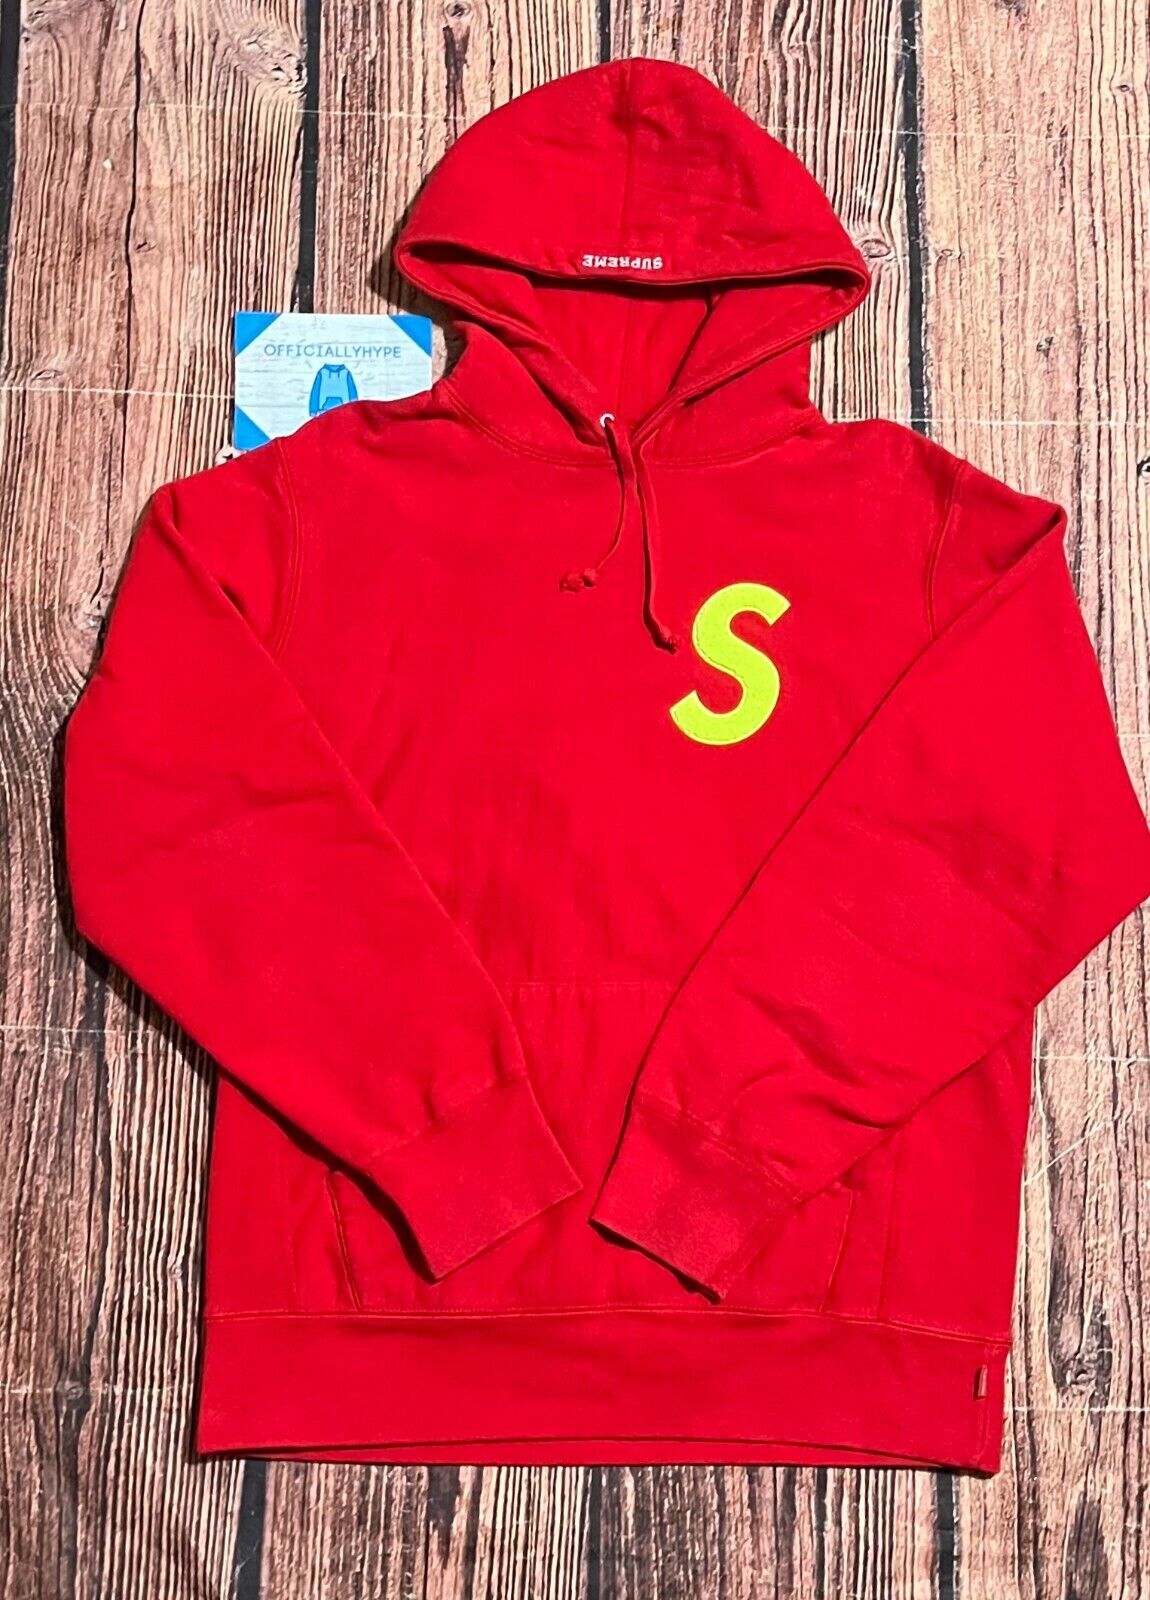 Supreme S Logo Red Hooded Sweatshirt Hoodie Size Medium FW19